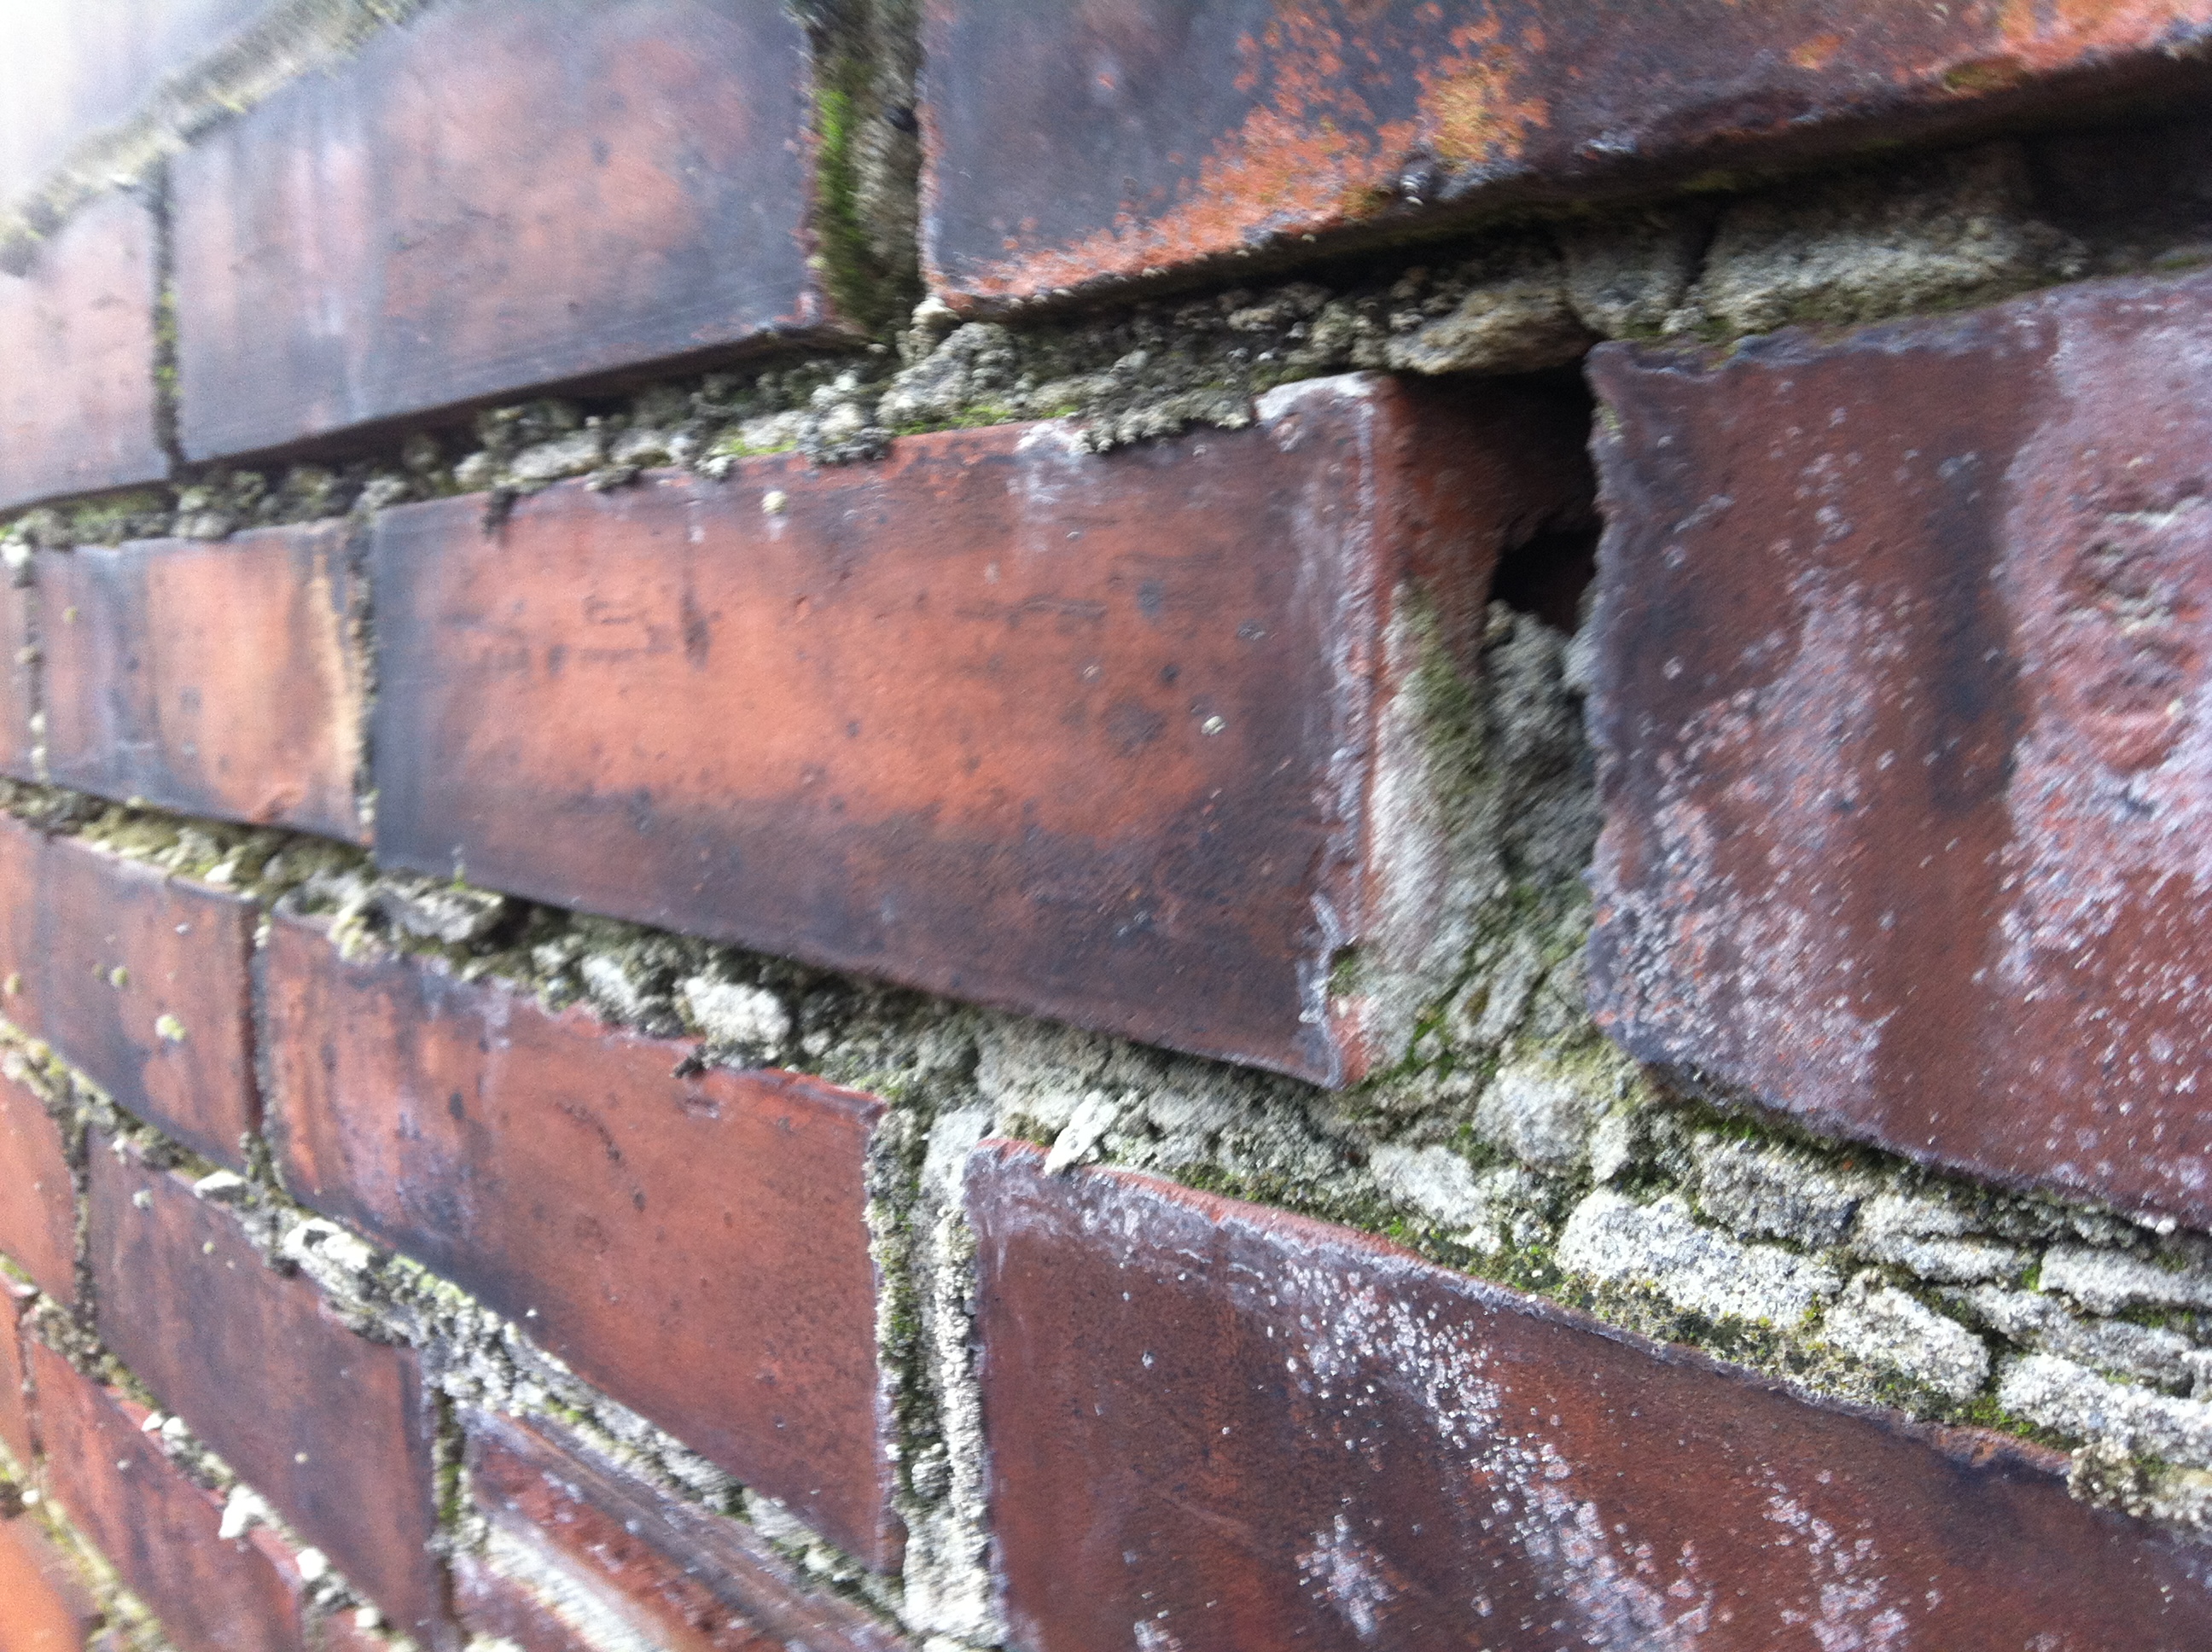 Deteriorating mortar on a brick chimney.